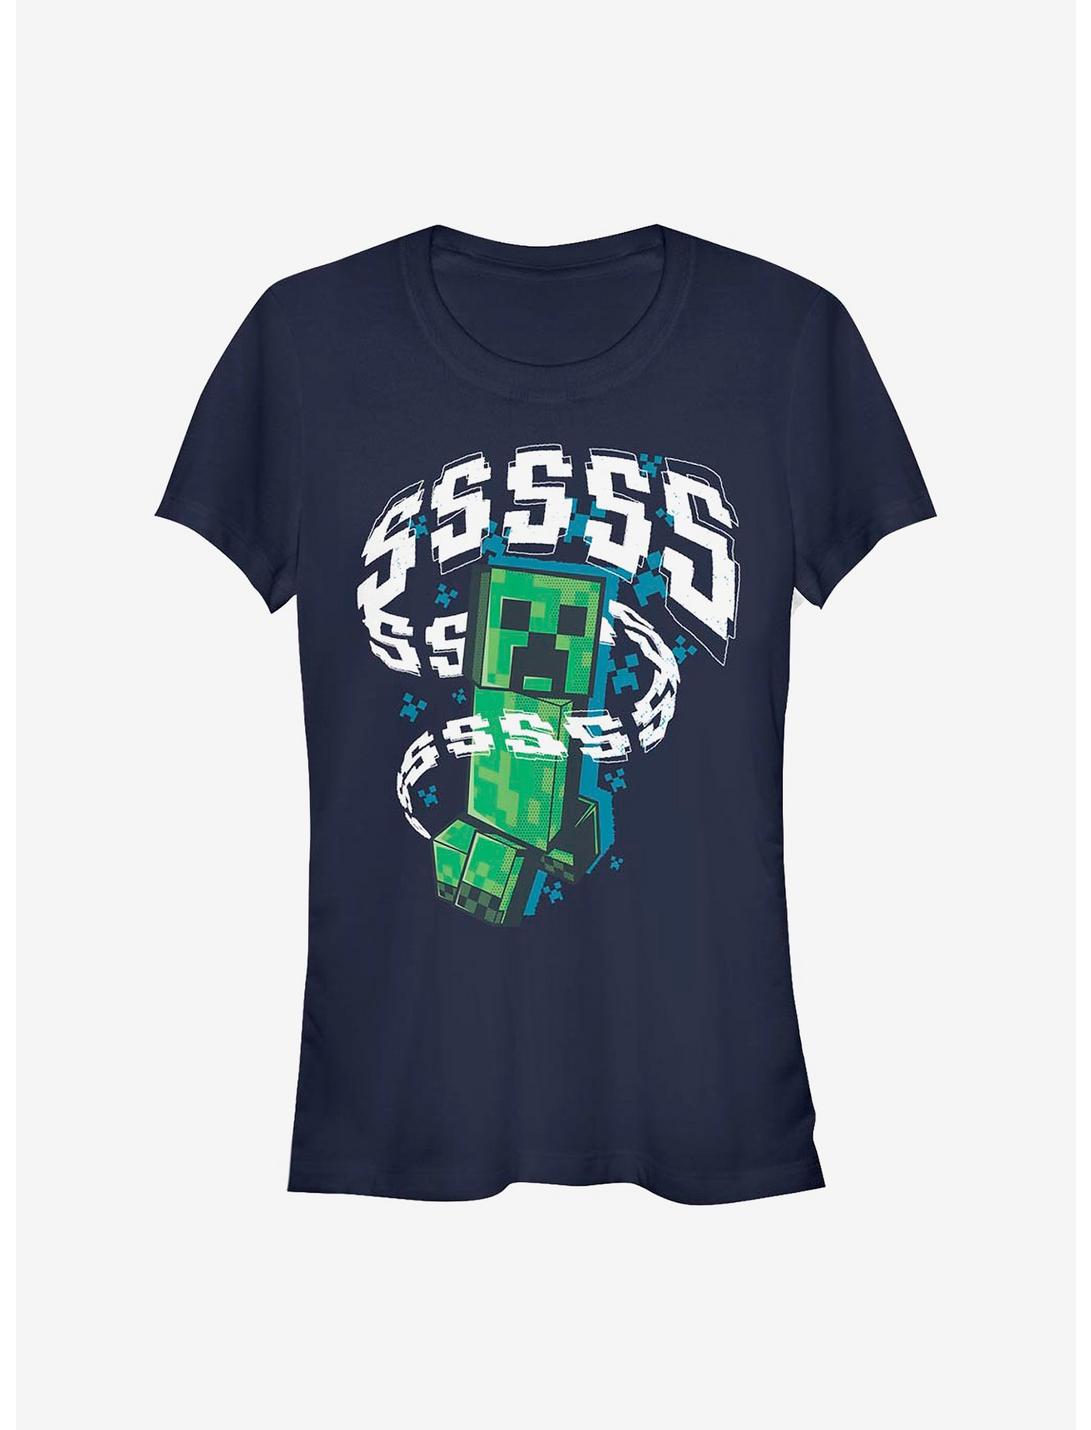 Minecraft Creeper SSSSS Girls T-Shirt, NAVY, hi-res